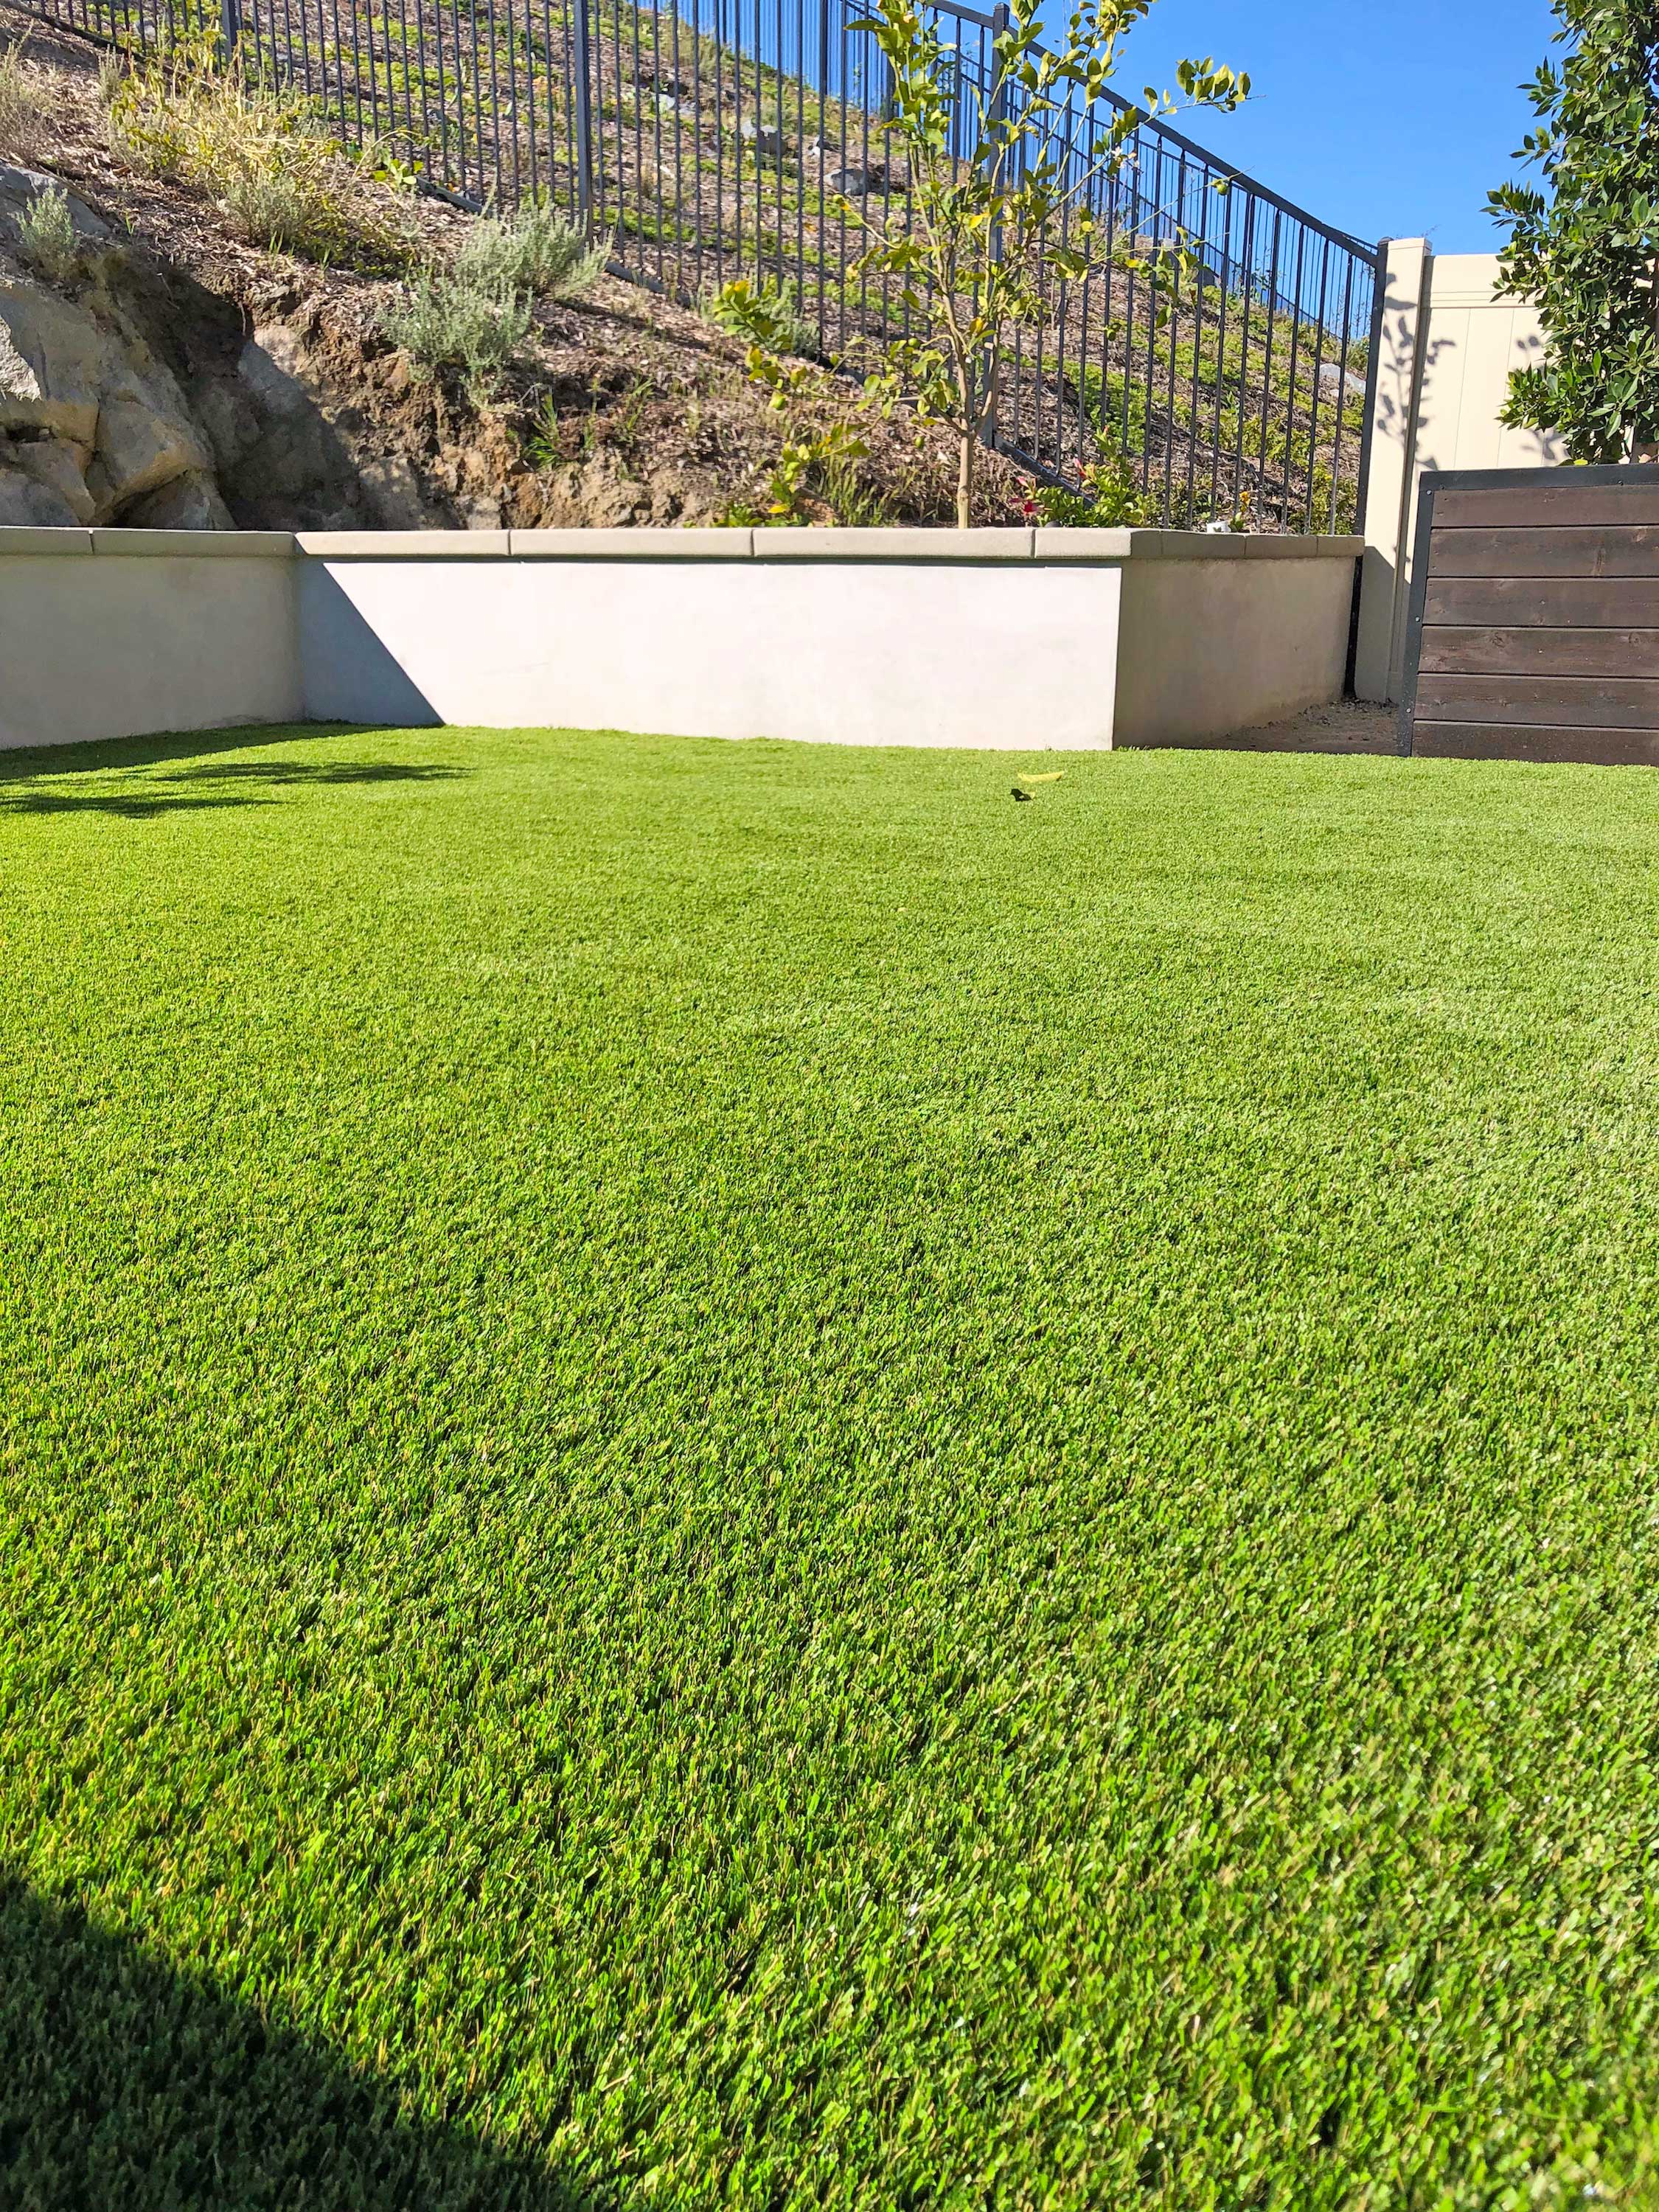 Backyard Lawn Renovation With Artificial Grass San Diego California